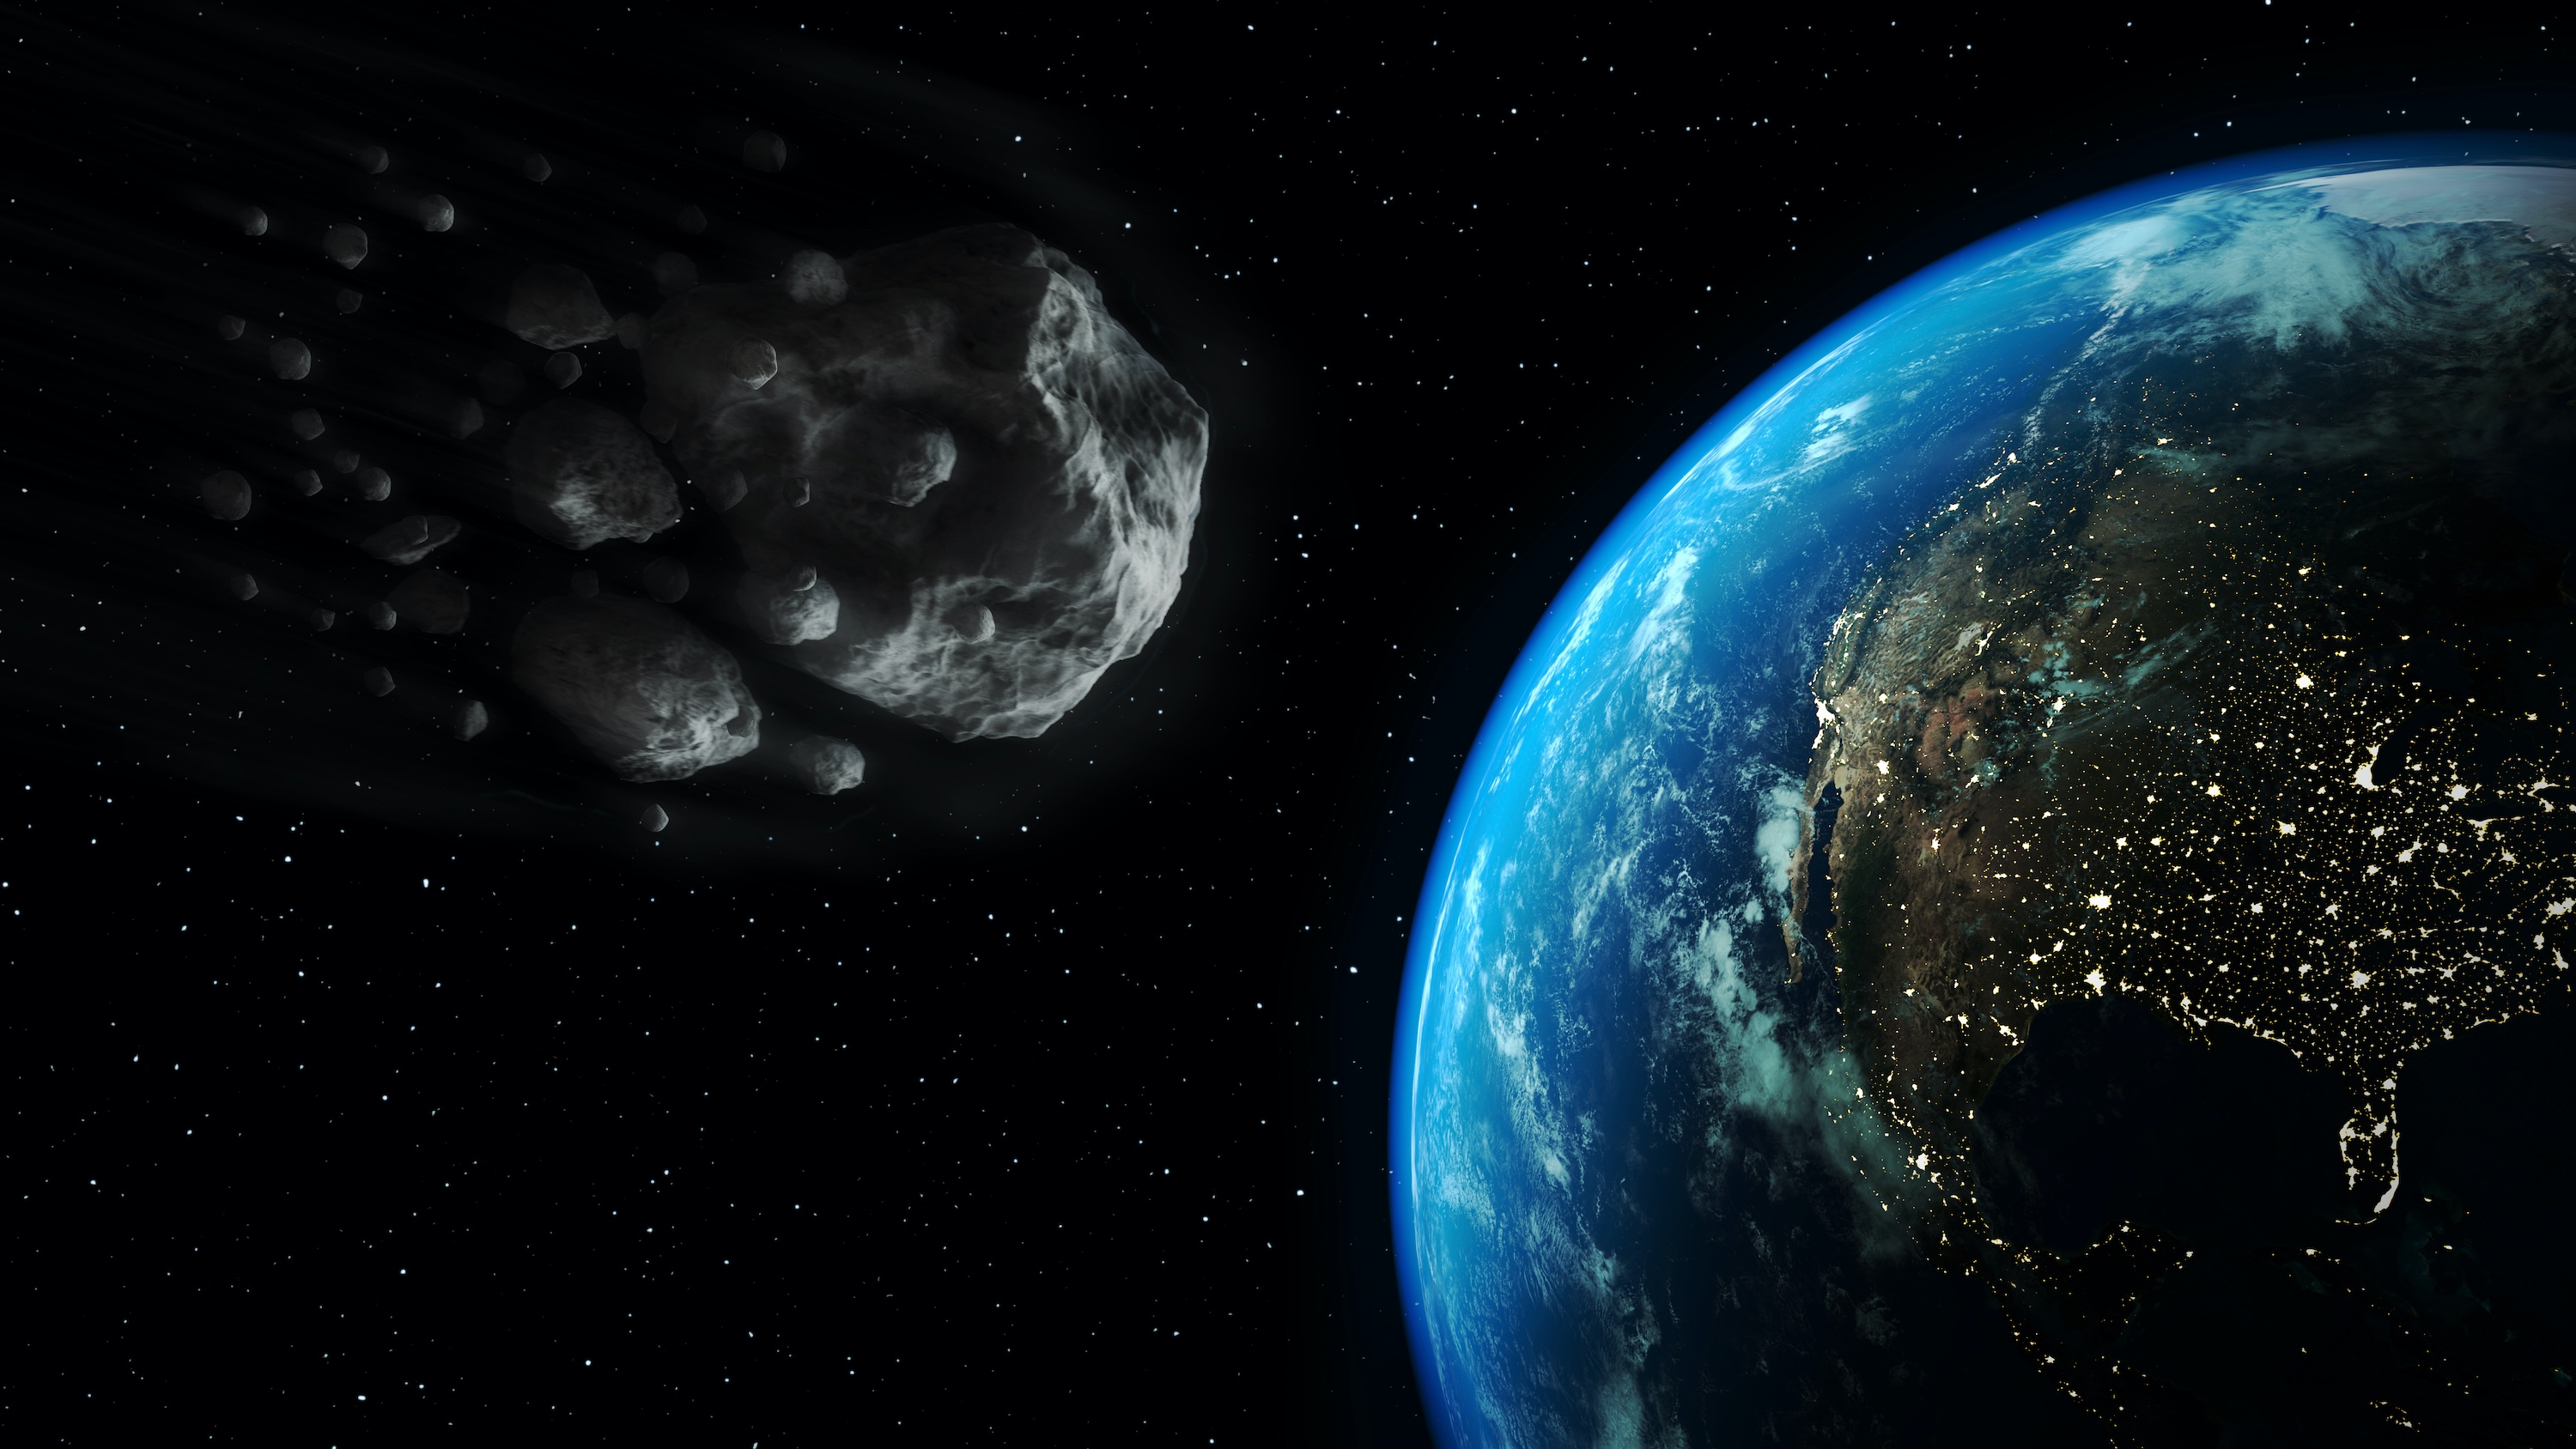 Vue d'artiste de l'astéroïde 2018 VP1 passant près de la Terre. © Marcos Silva, Adobe Stock